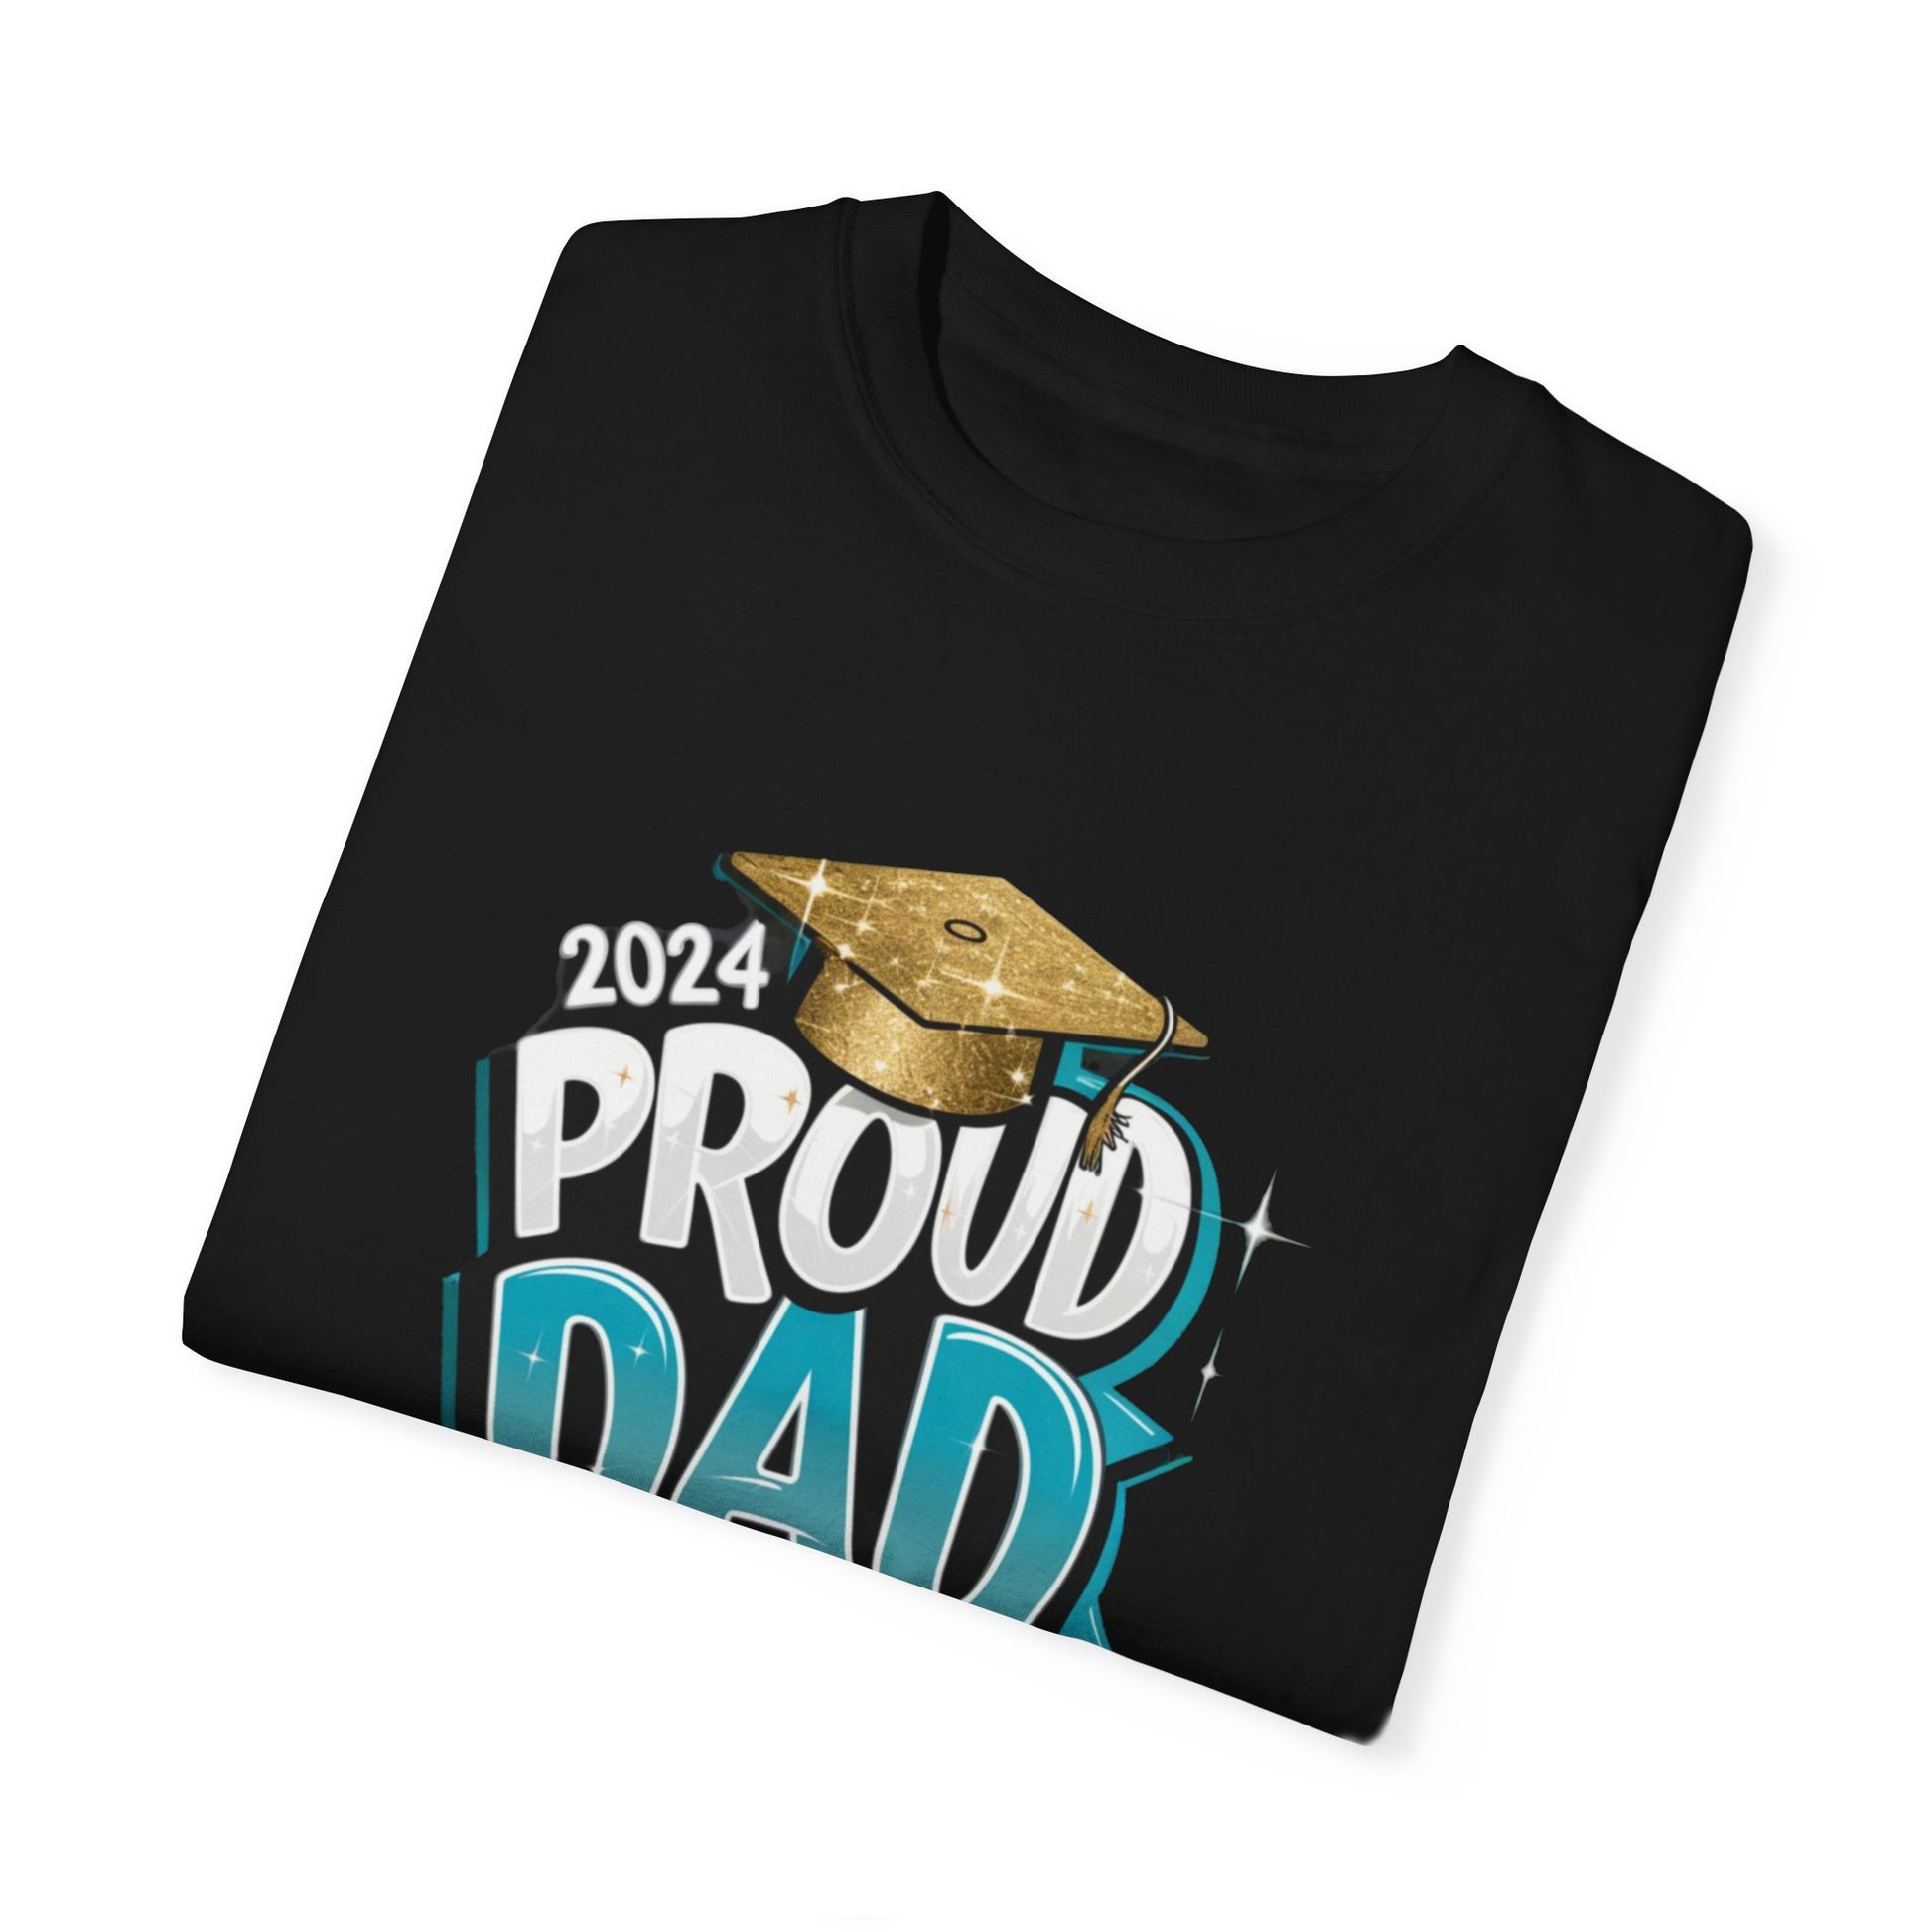 Proud Dad of a 2024 Graduate Unisex Garment-dyed T-shirt Cotton Funny Humorous Graphic Soft Premium Unisex Men Women Black T-shirt Birthday Gift-17